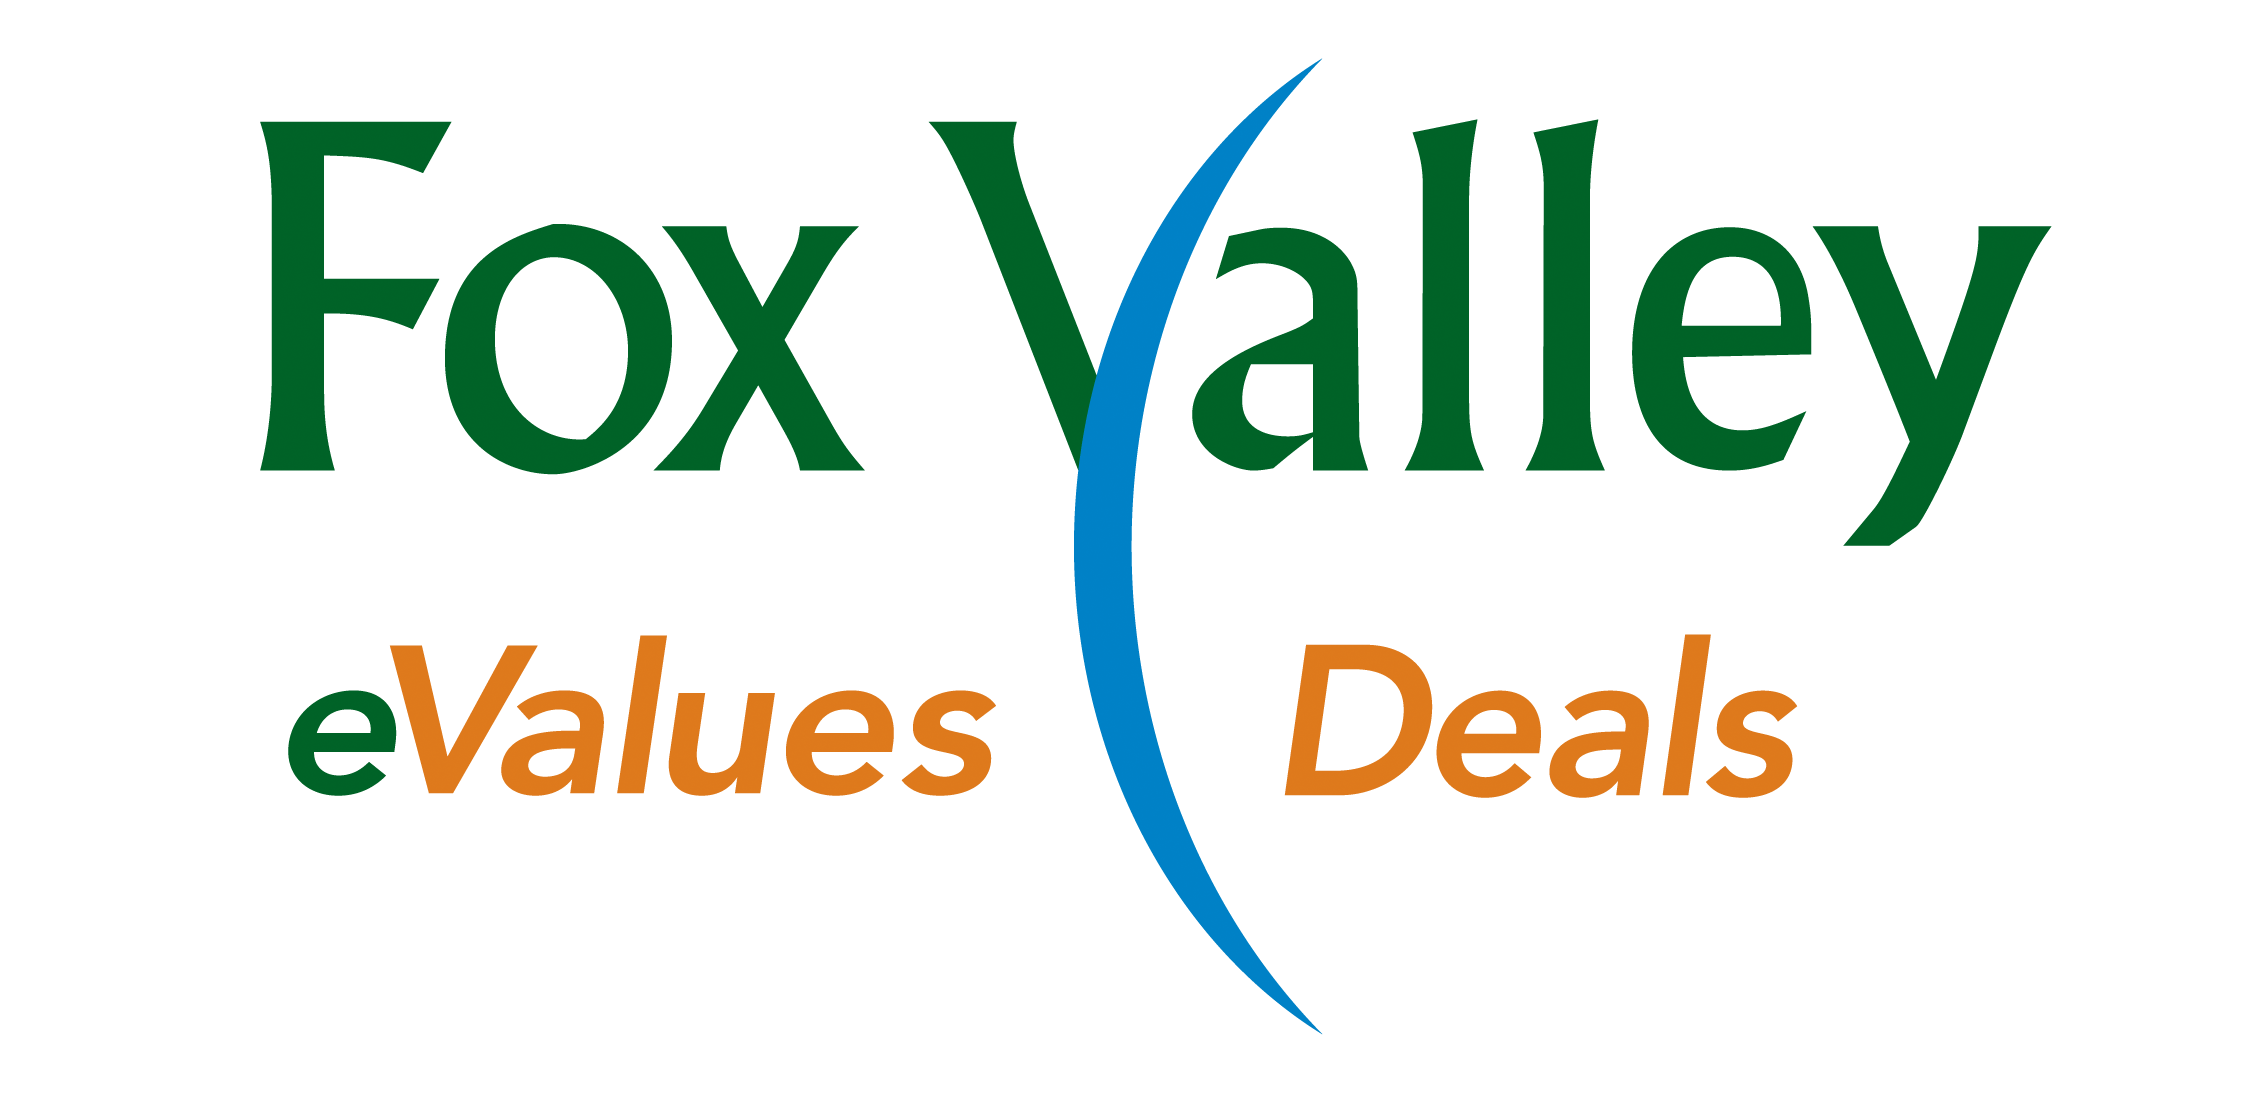 Fox Valley Deals Logo (Cropped)